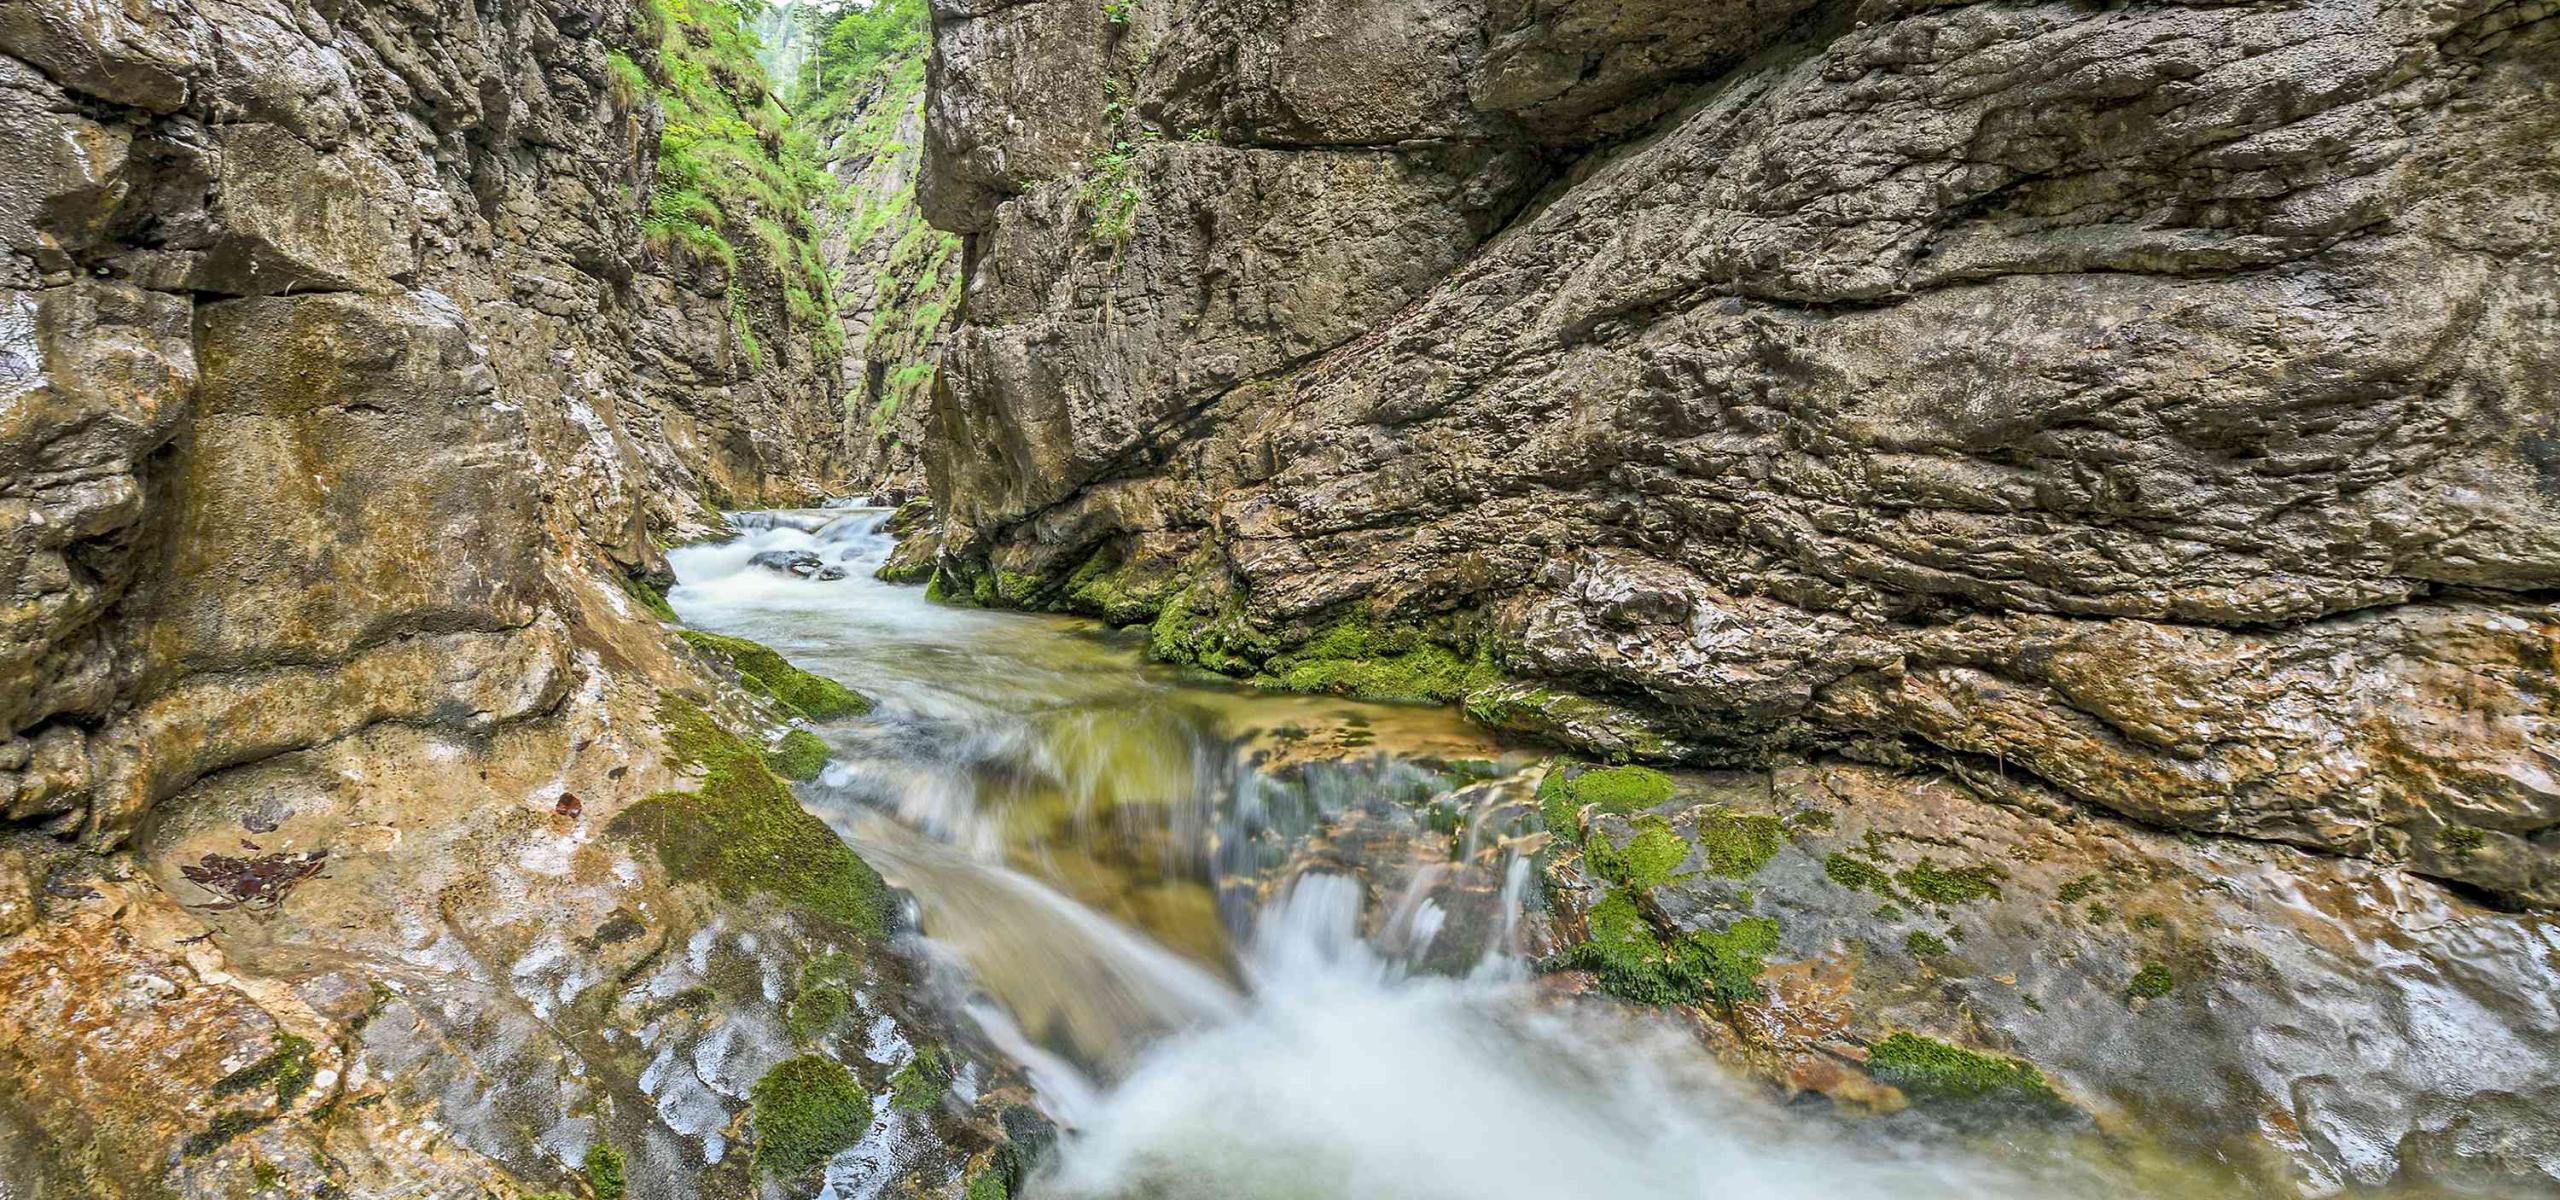 Mountain stream forces its way through a deep, narrow gorge